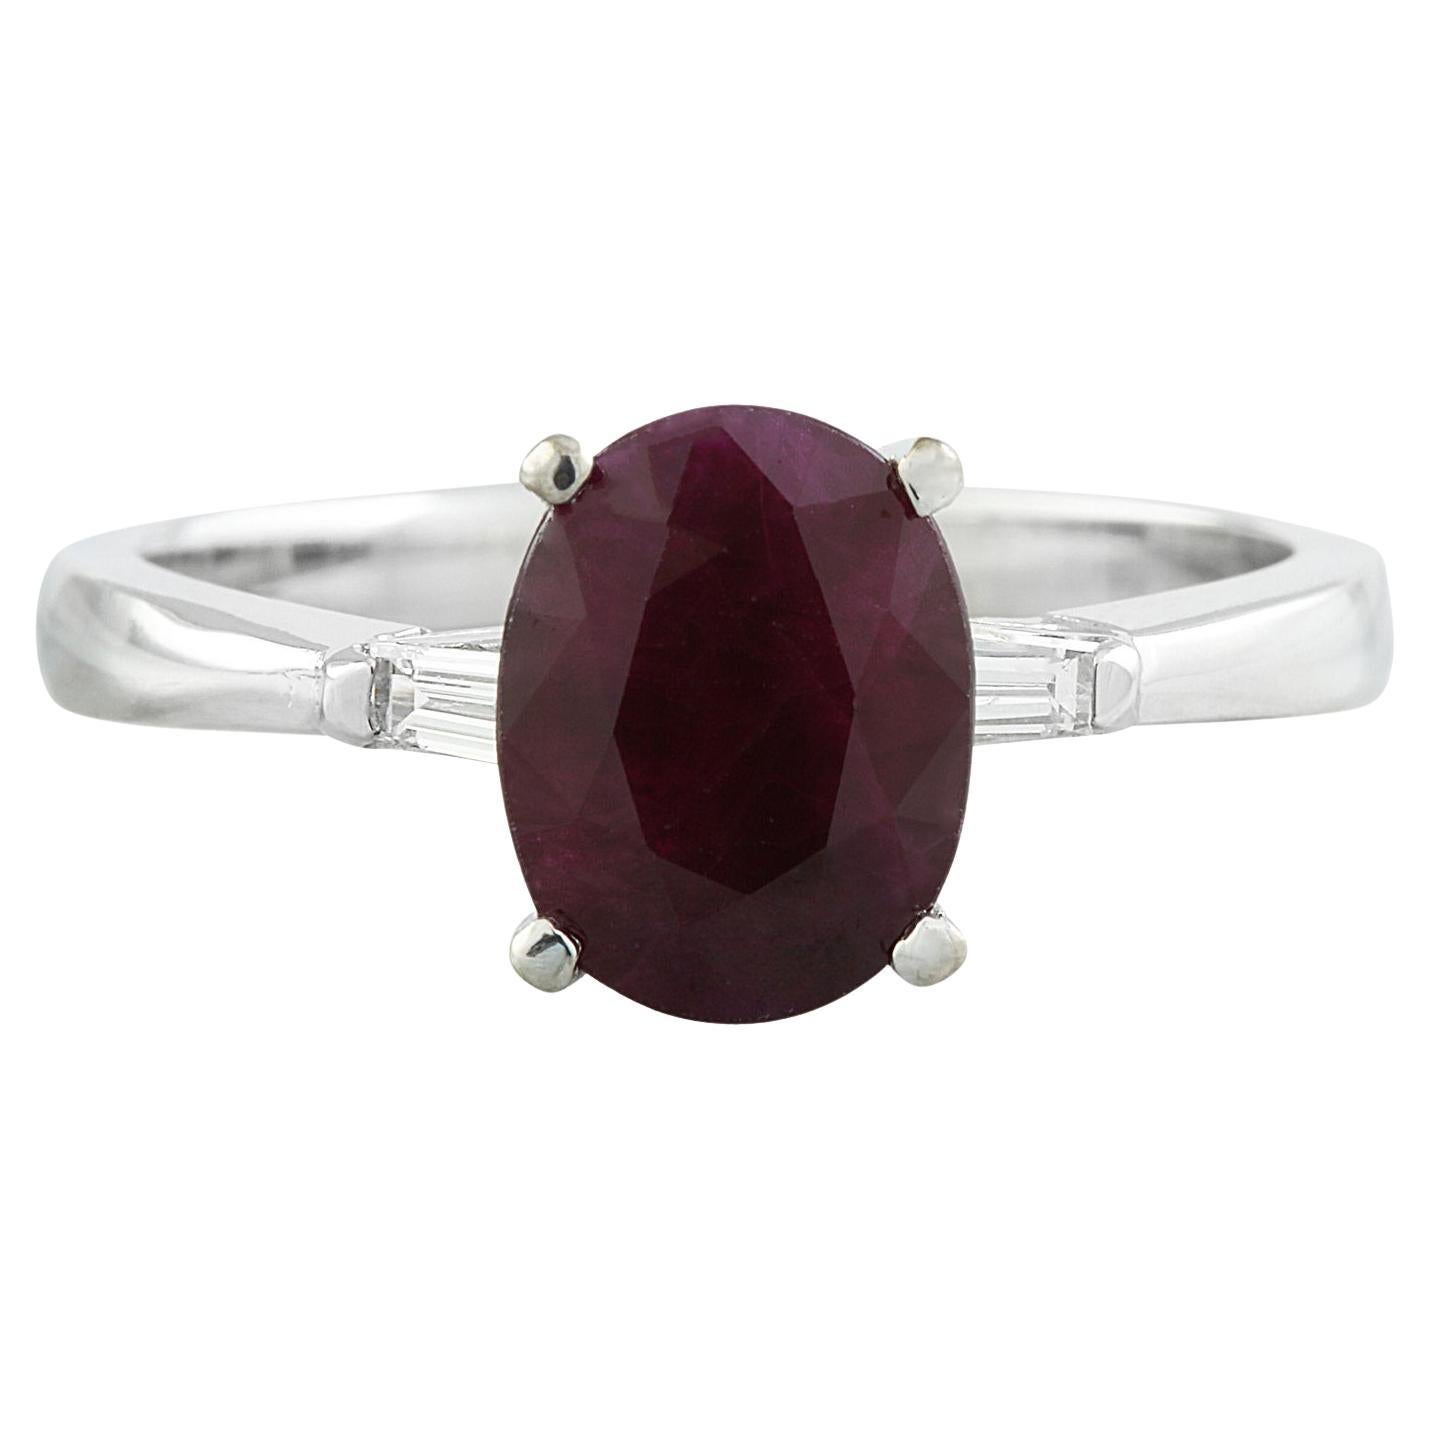 Radiant Ruby Diamond Ring: Timeless Elegance in 14K Solid White Gold